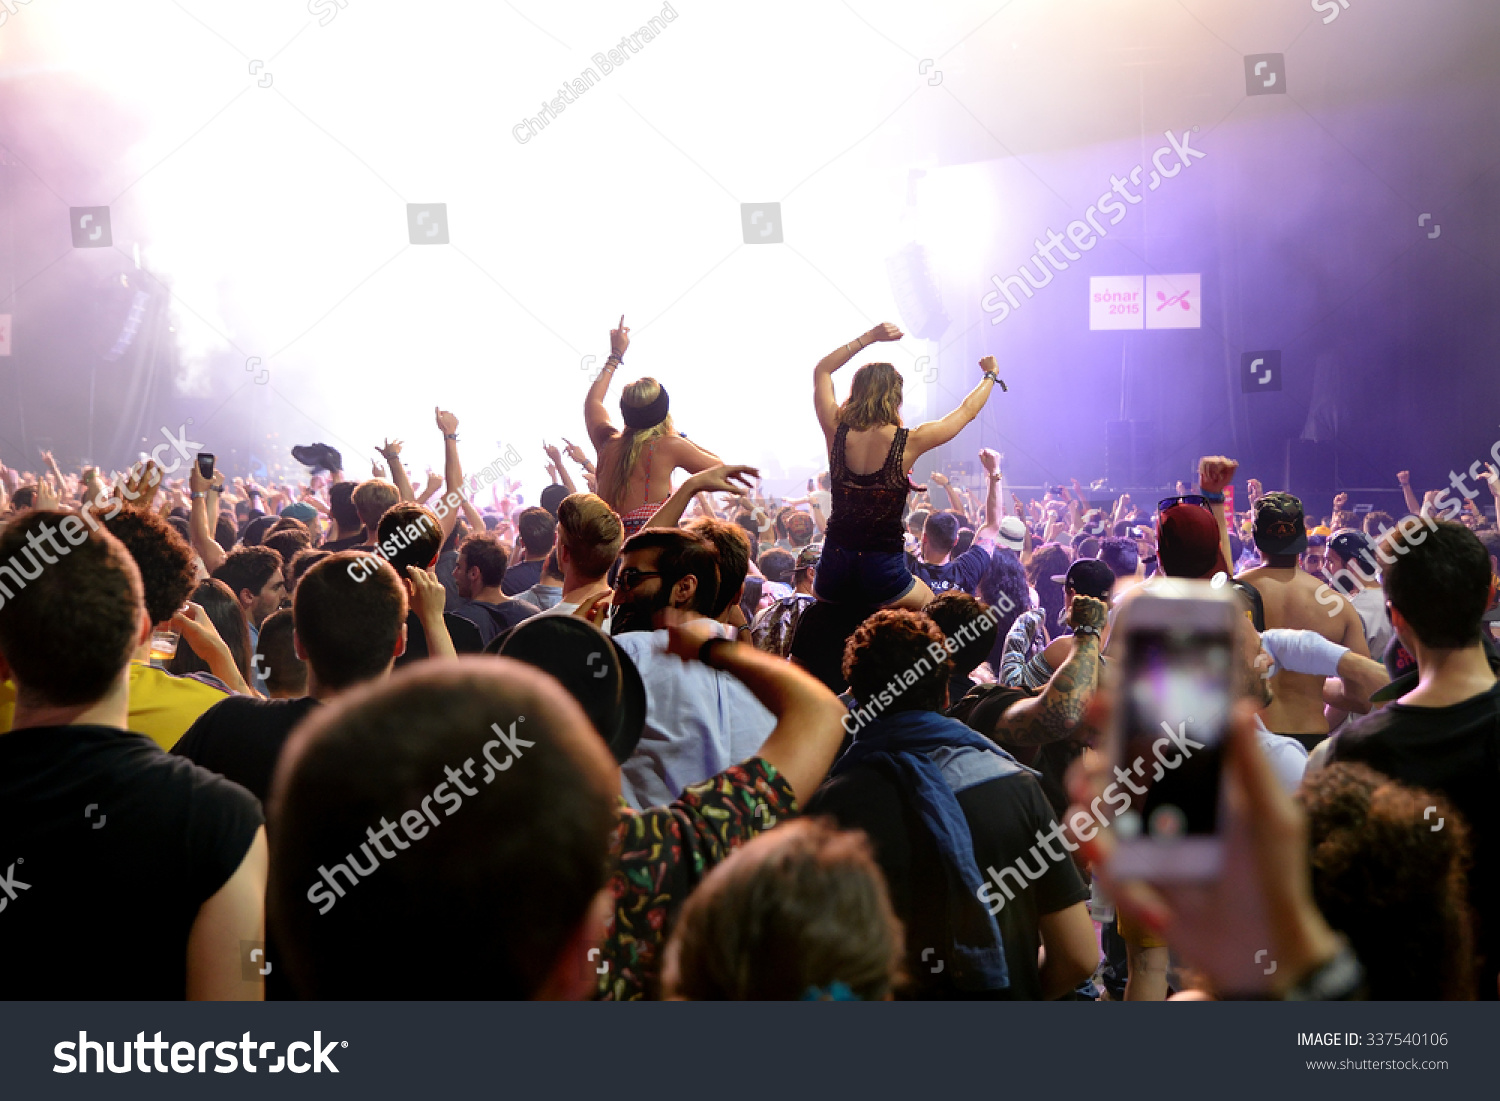 BARCELONA - JUN 19: Crowd dance in a concert at Sonar Festival on June 19, 2015 in Barcelona, Spain. #337540106